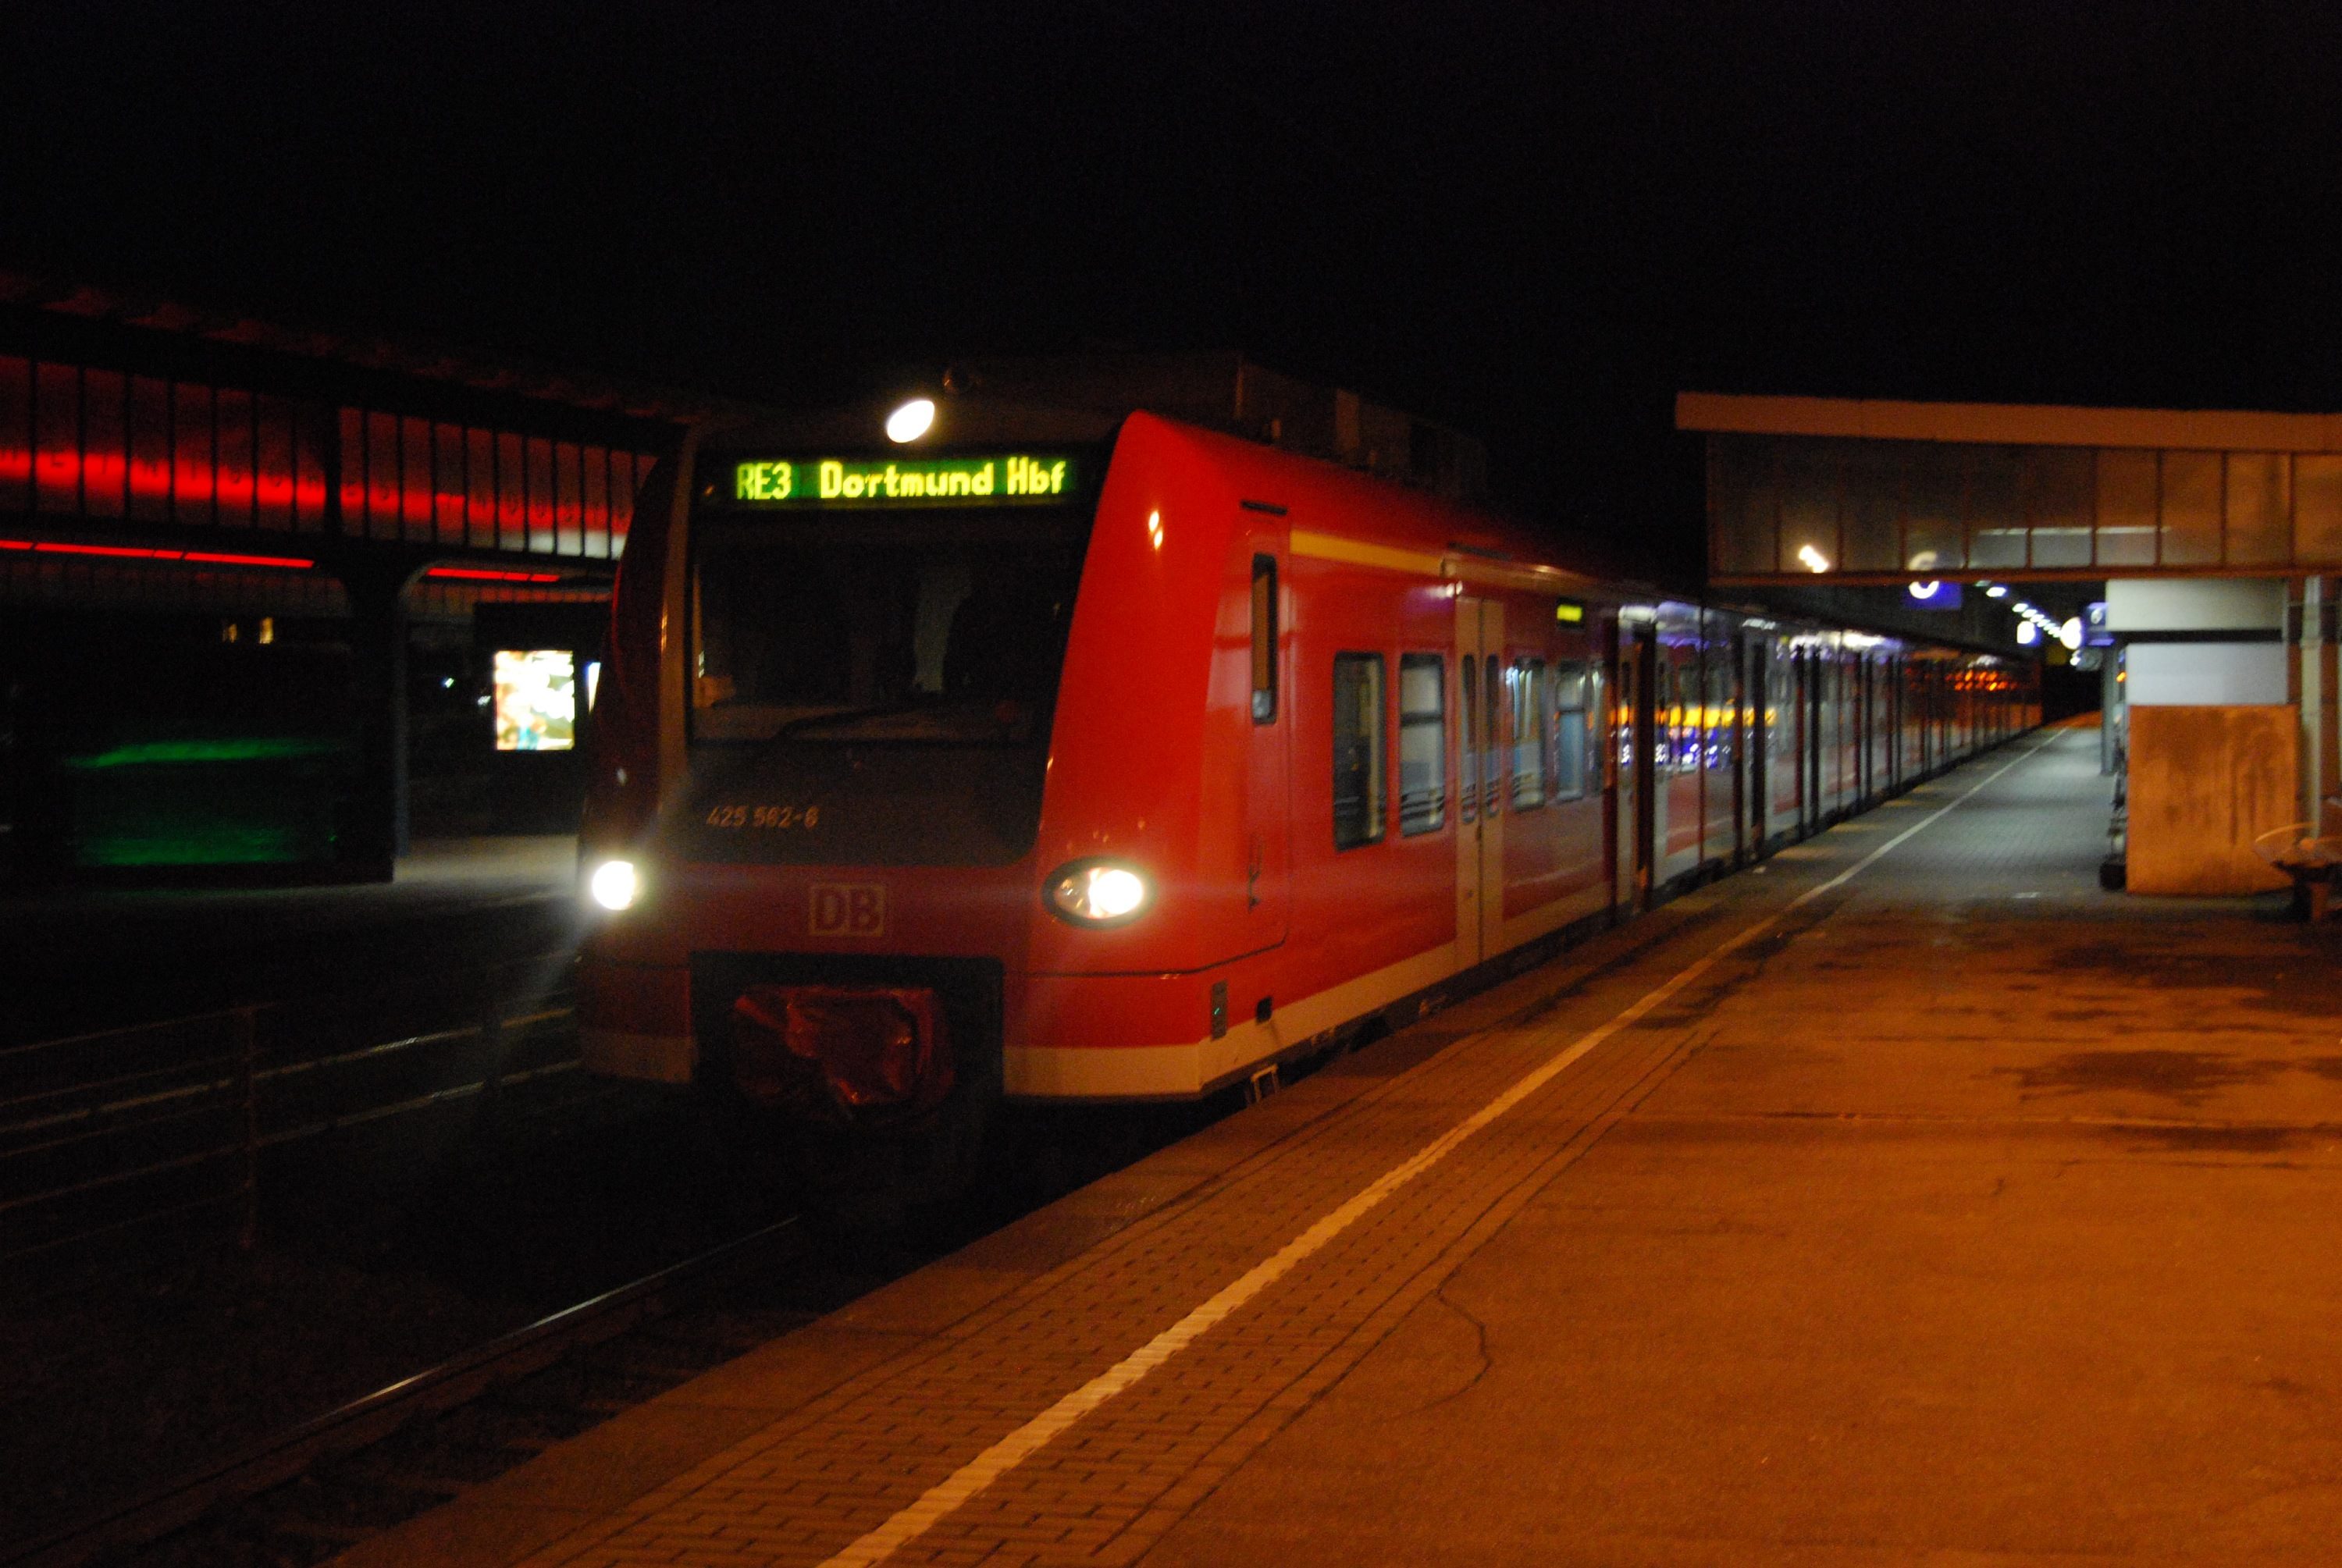 RE3 Dortmund Hbf Oberhausen Hbf